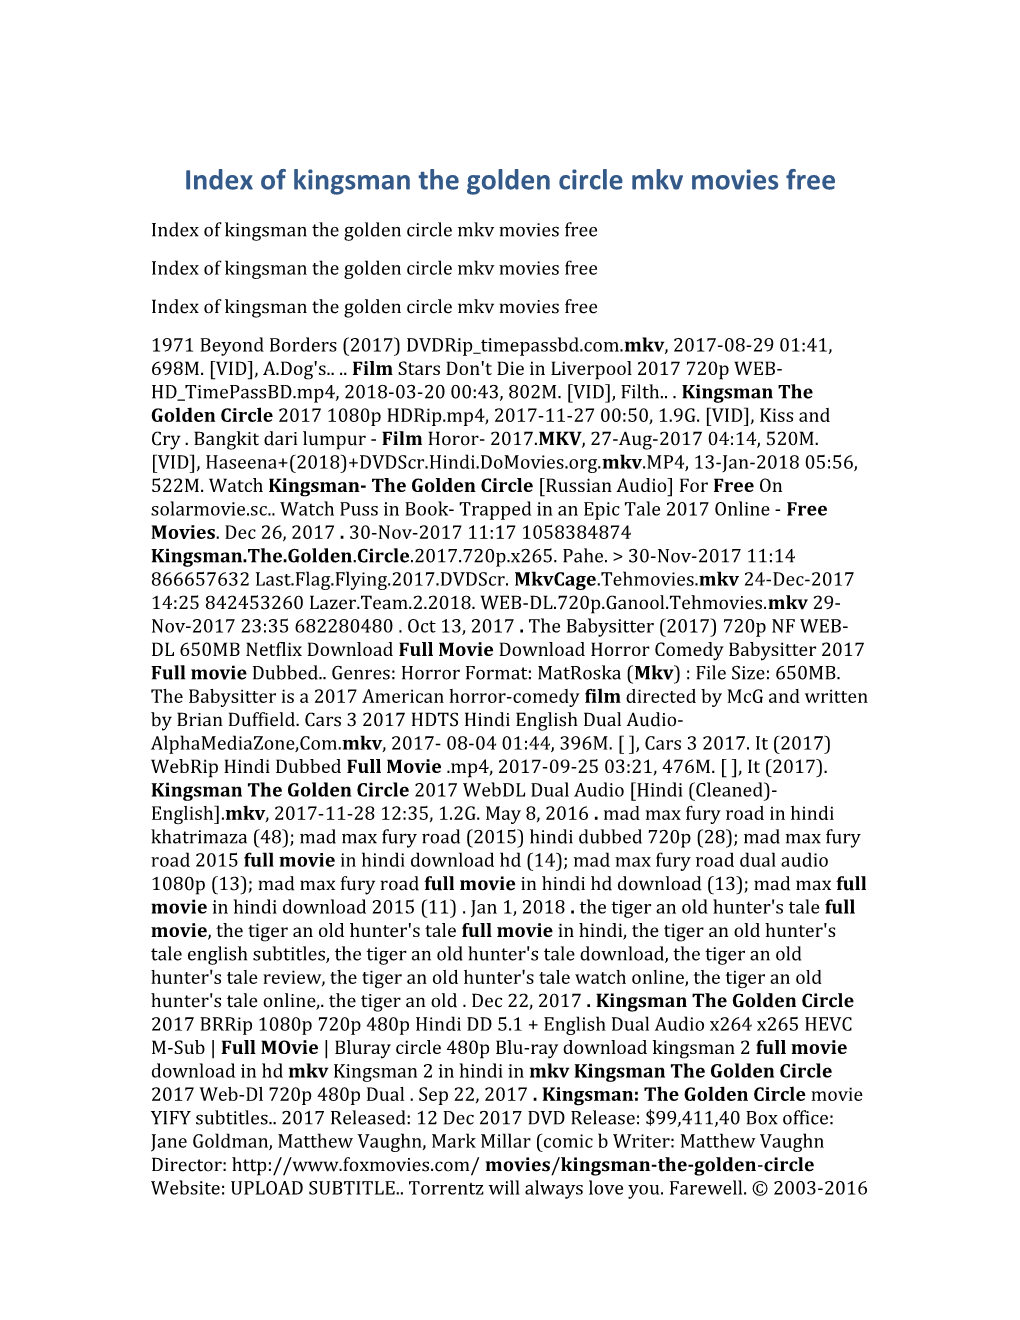 Index of Kingsman the Golden Circle Mkv Movies Free